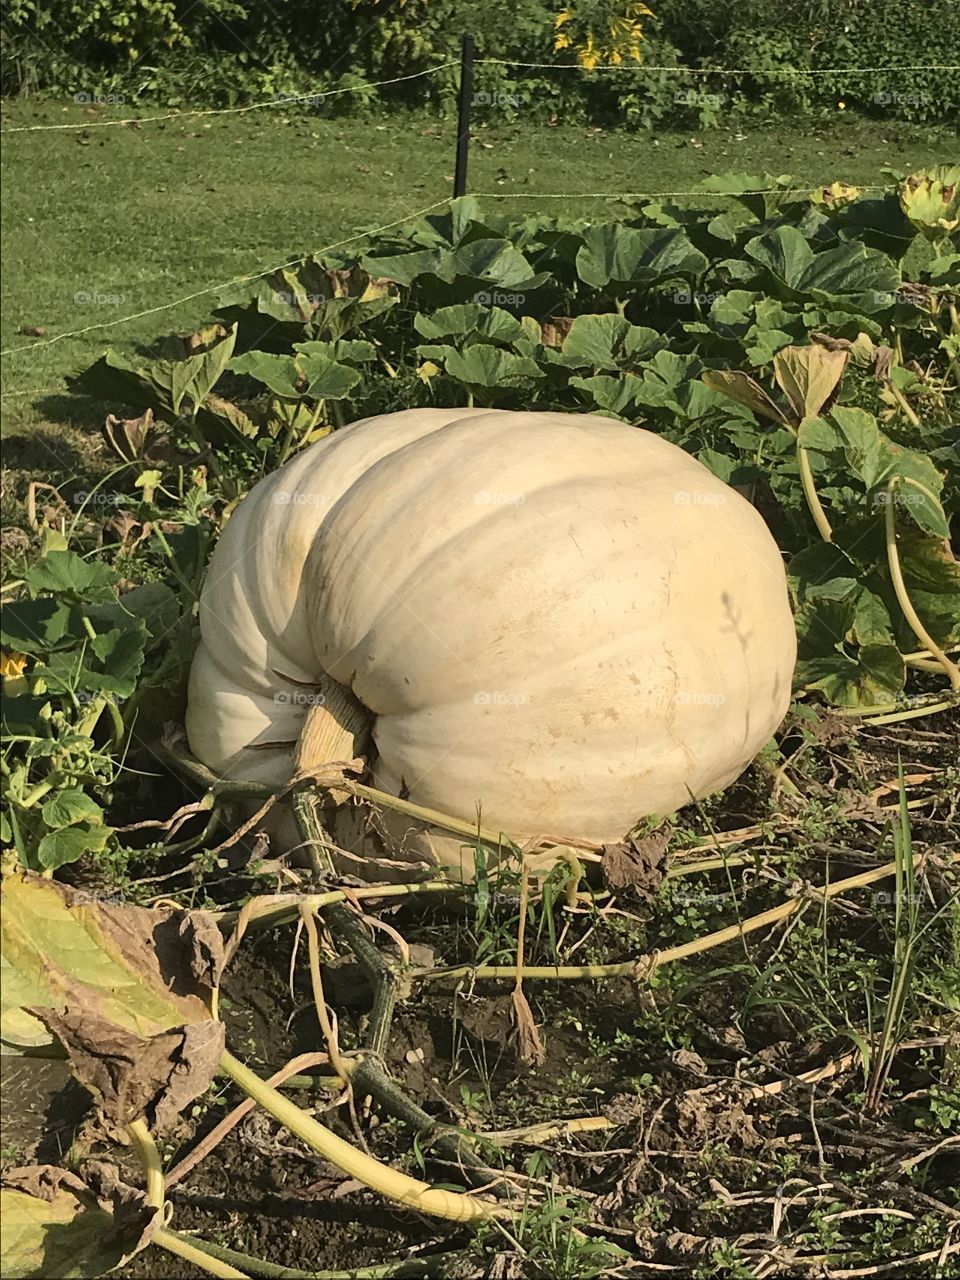 The great pumpkin